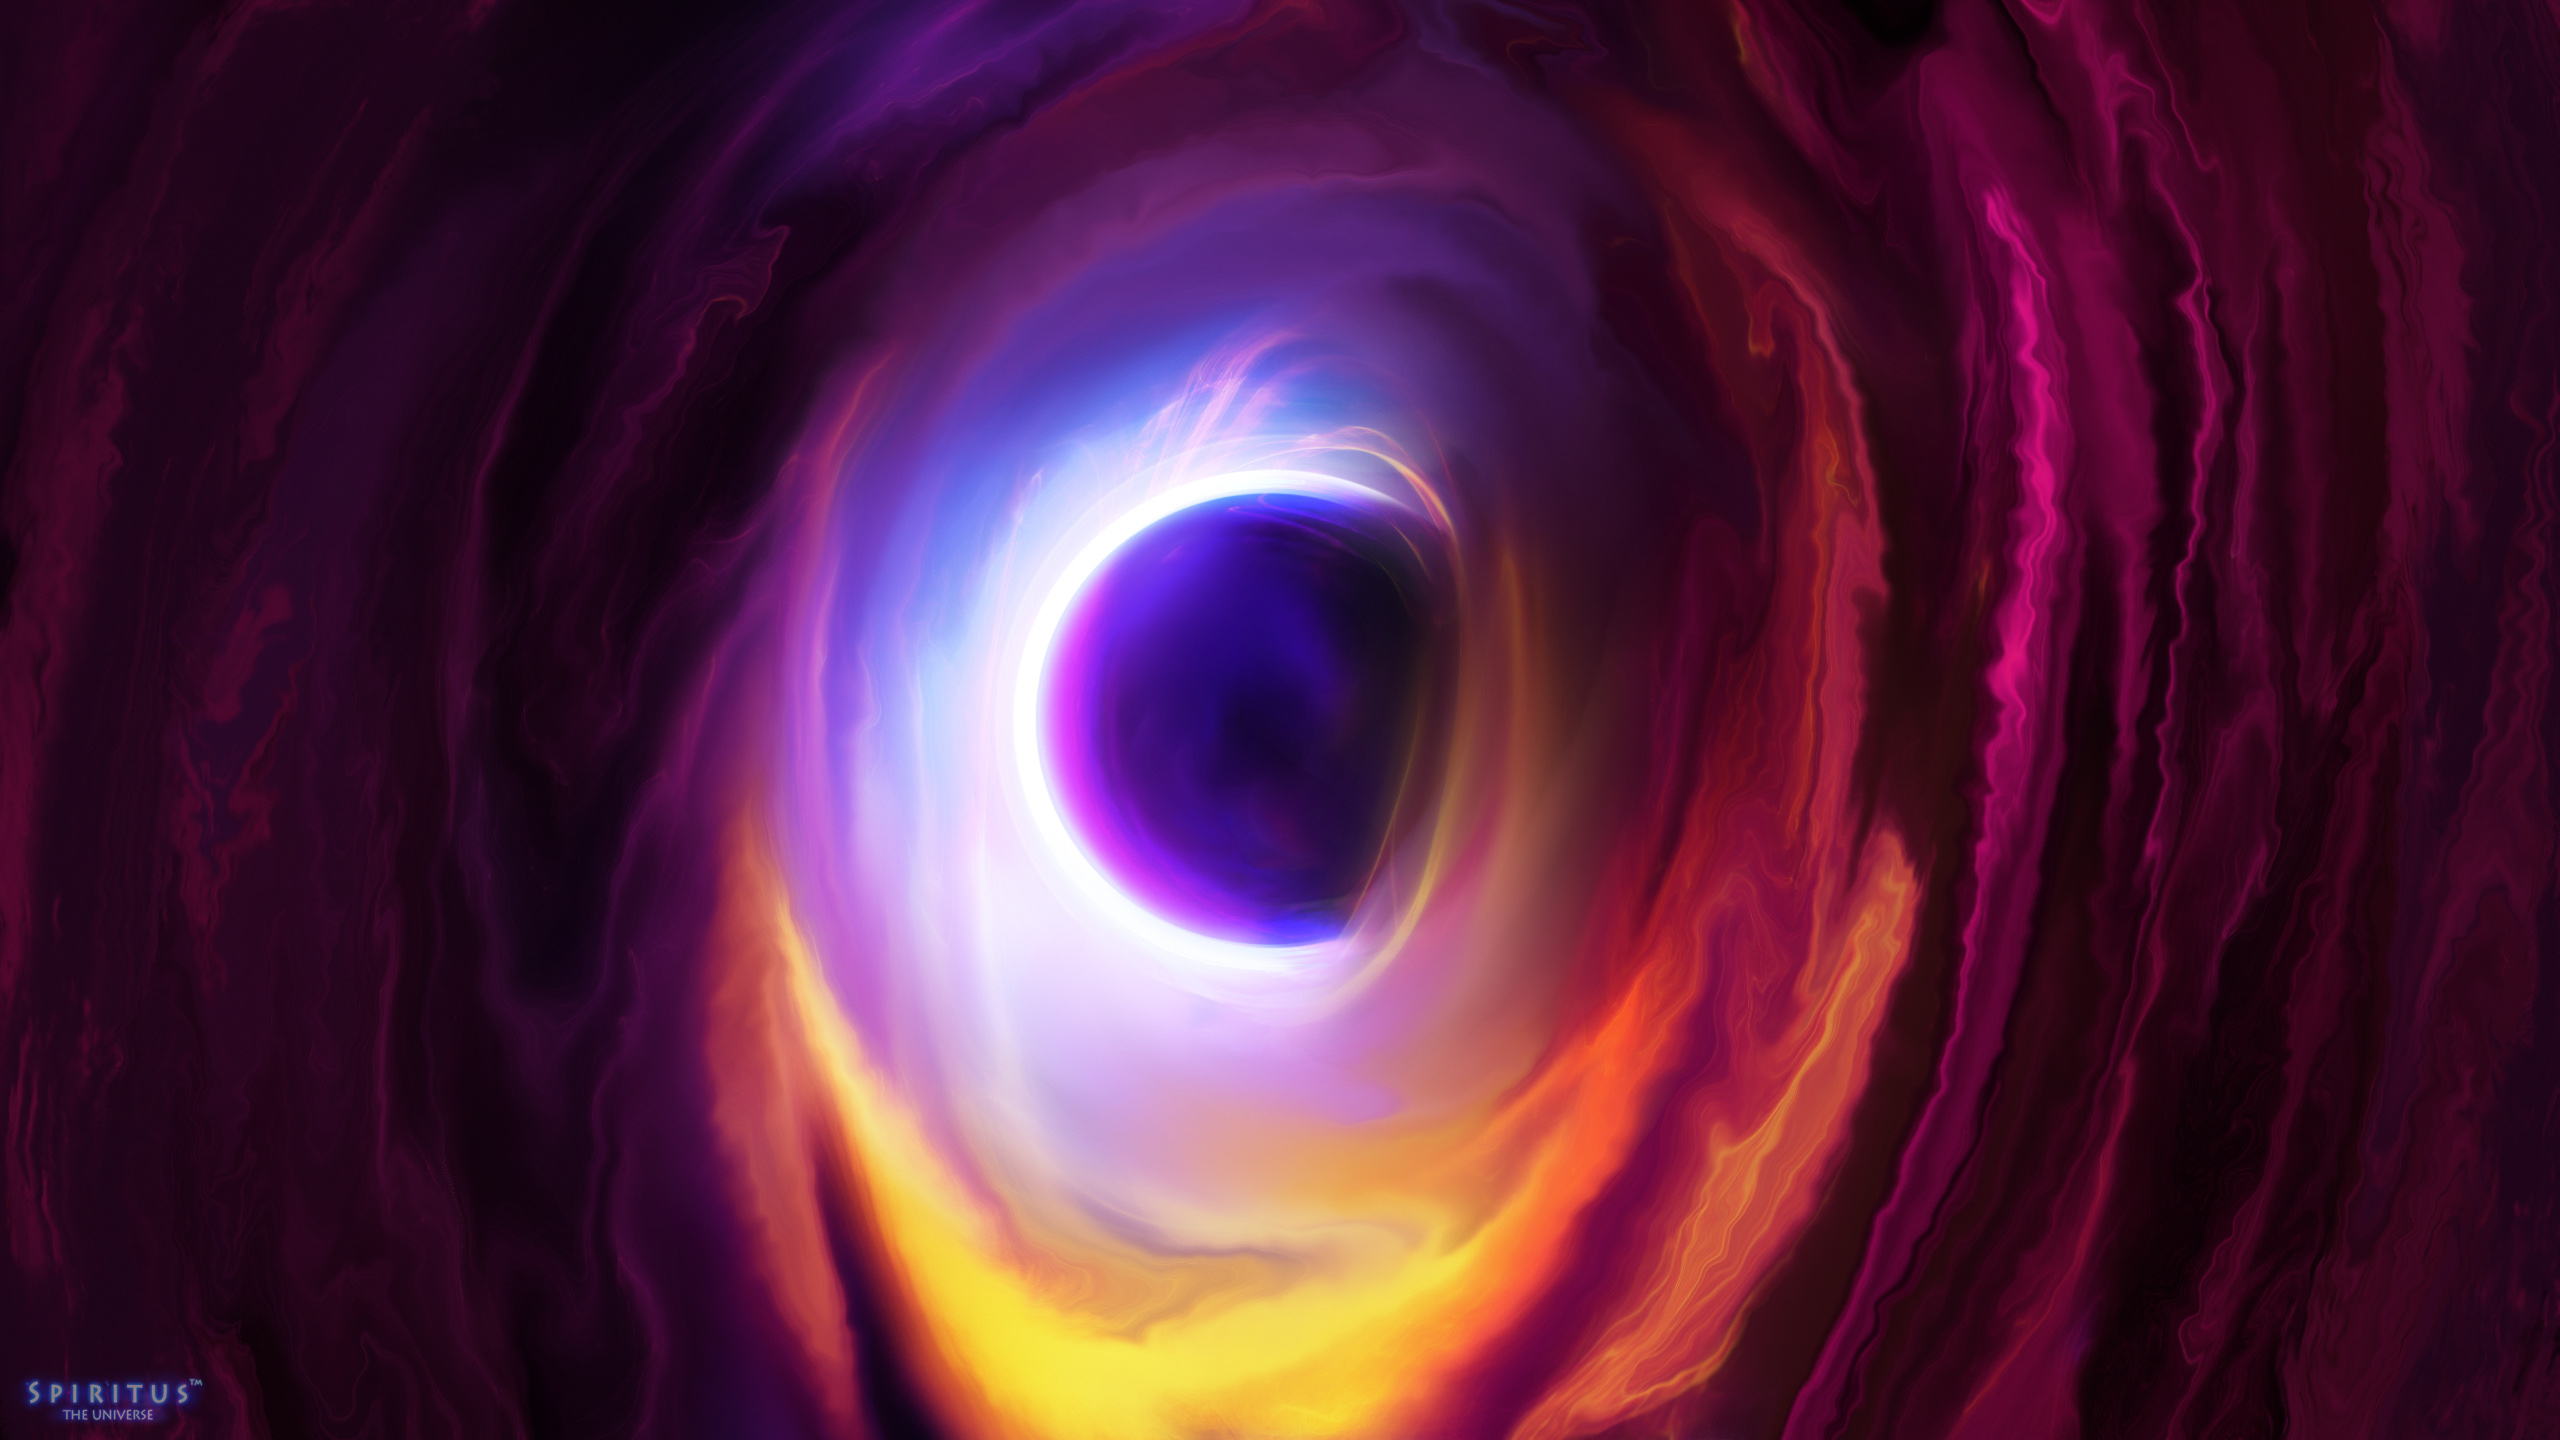 General 2560x1440 digital art artwork space art black holes galaxy abstract universe stars science fiction planet ERA-7